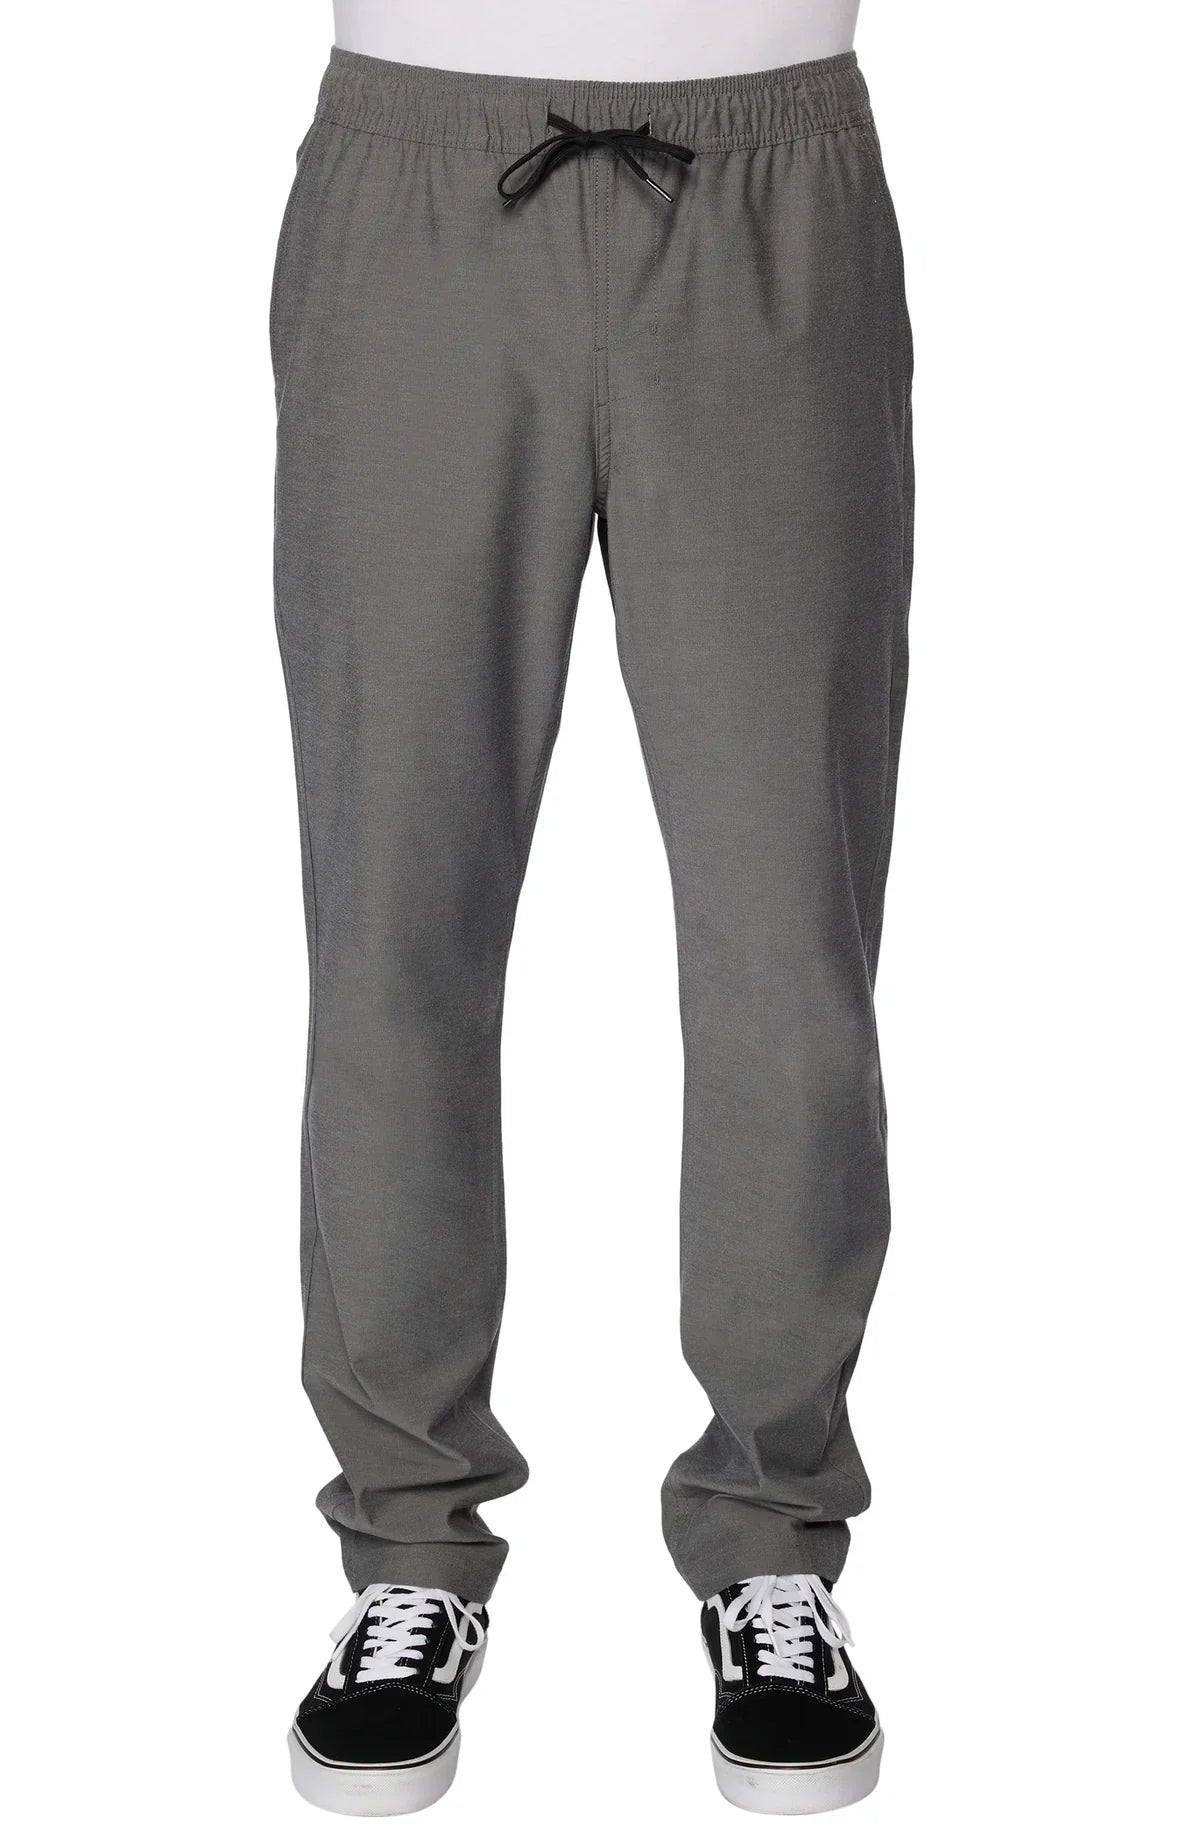 O'Neill Men's Venture E-Waist Hybrid Pants in grey